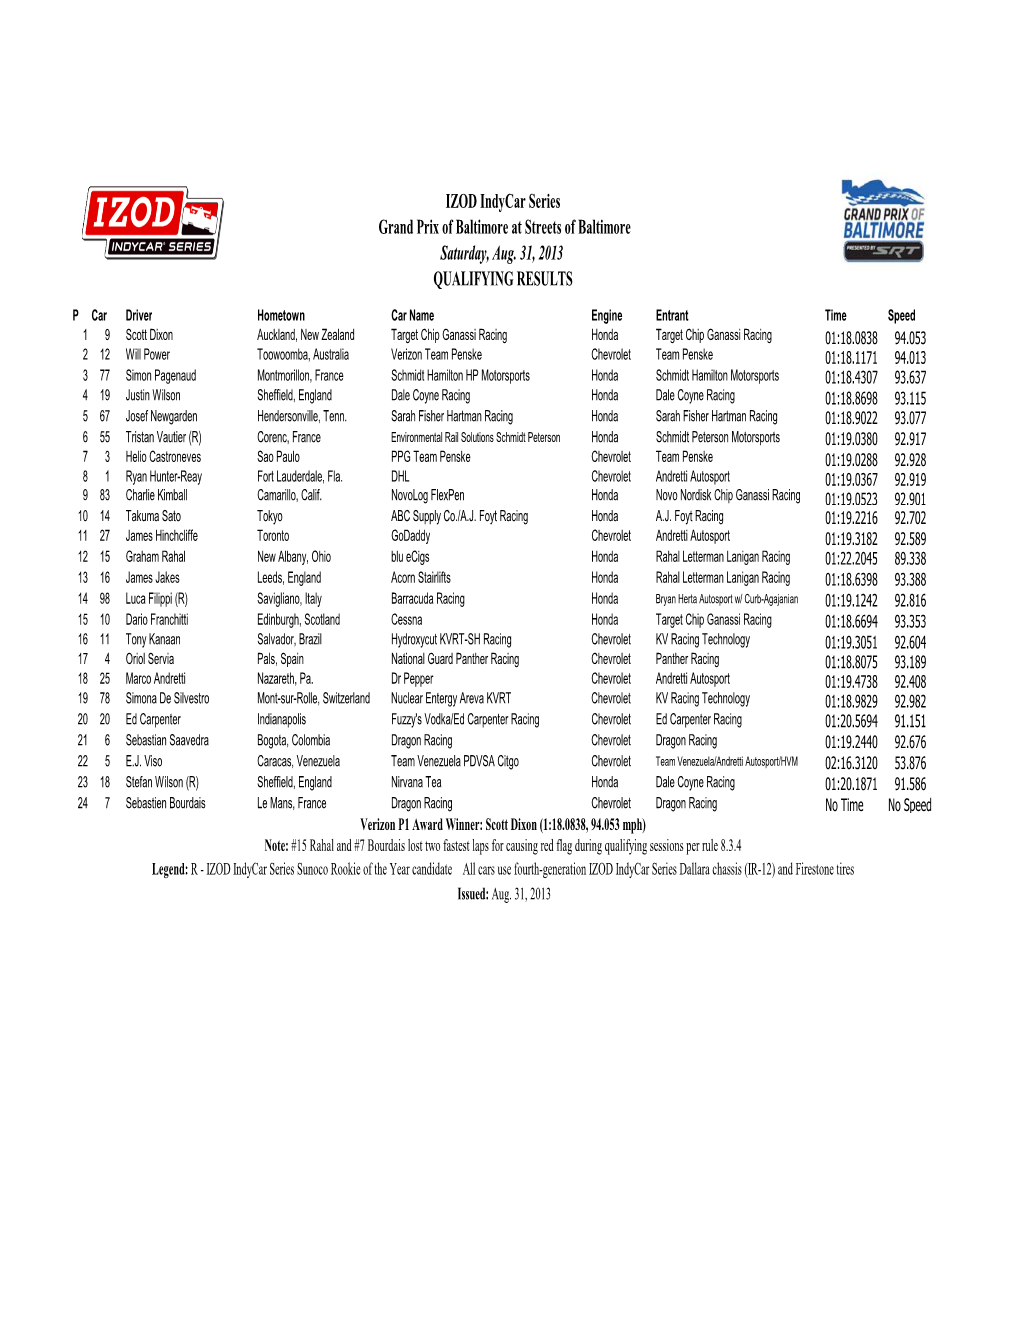 Gopro Grand Prix of Sonoma Qual Results